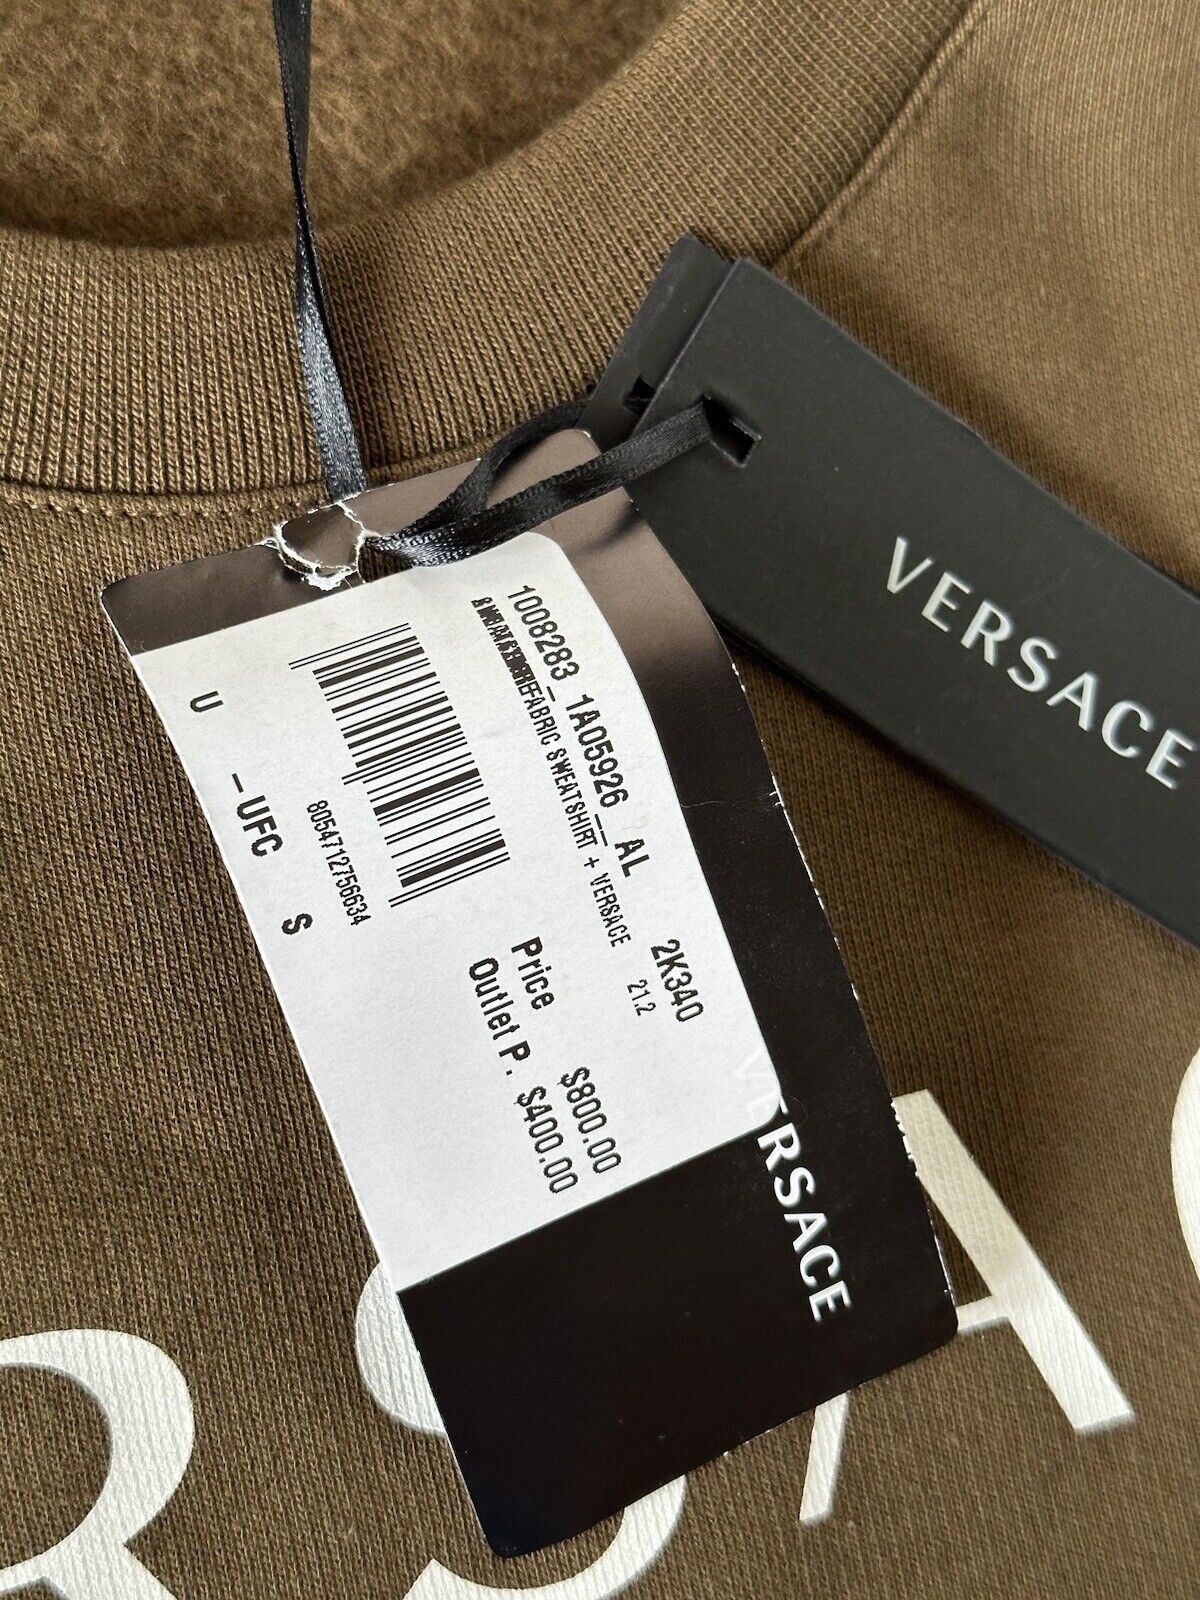 NWT $800 Versace Greek Key and Versace Logo Khaki Cotton Sweatshirt S 1008283